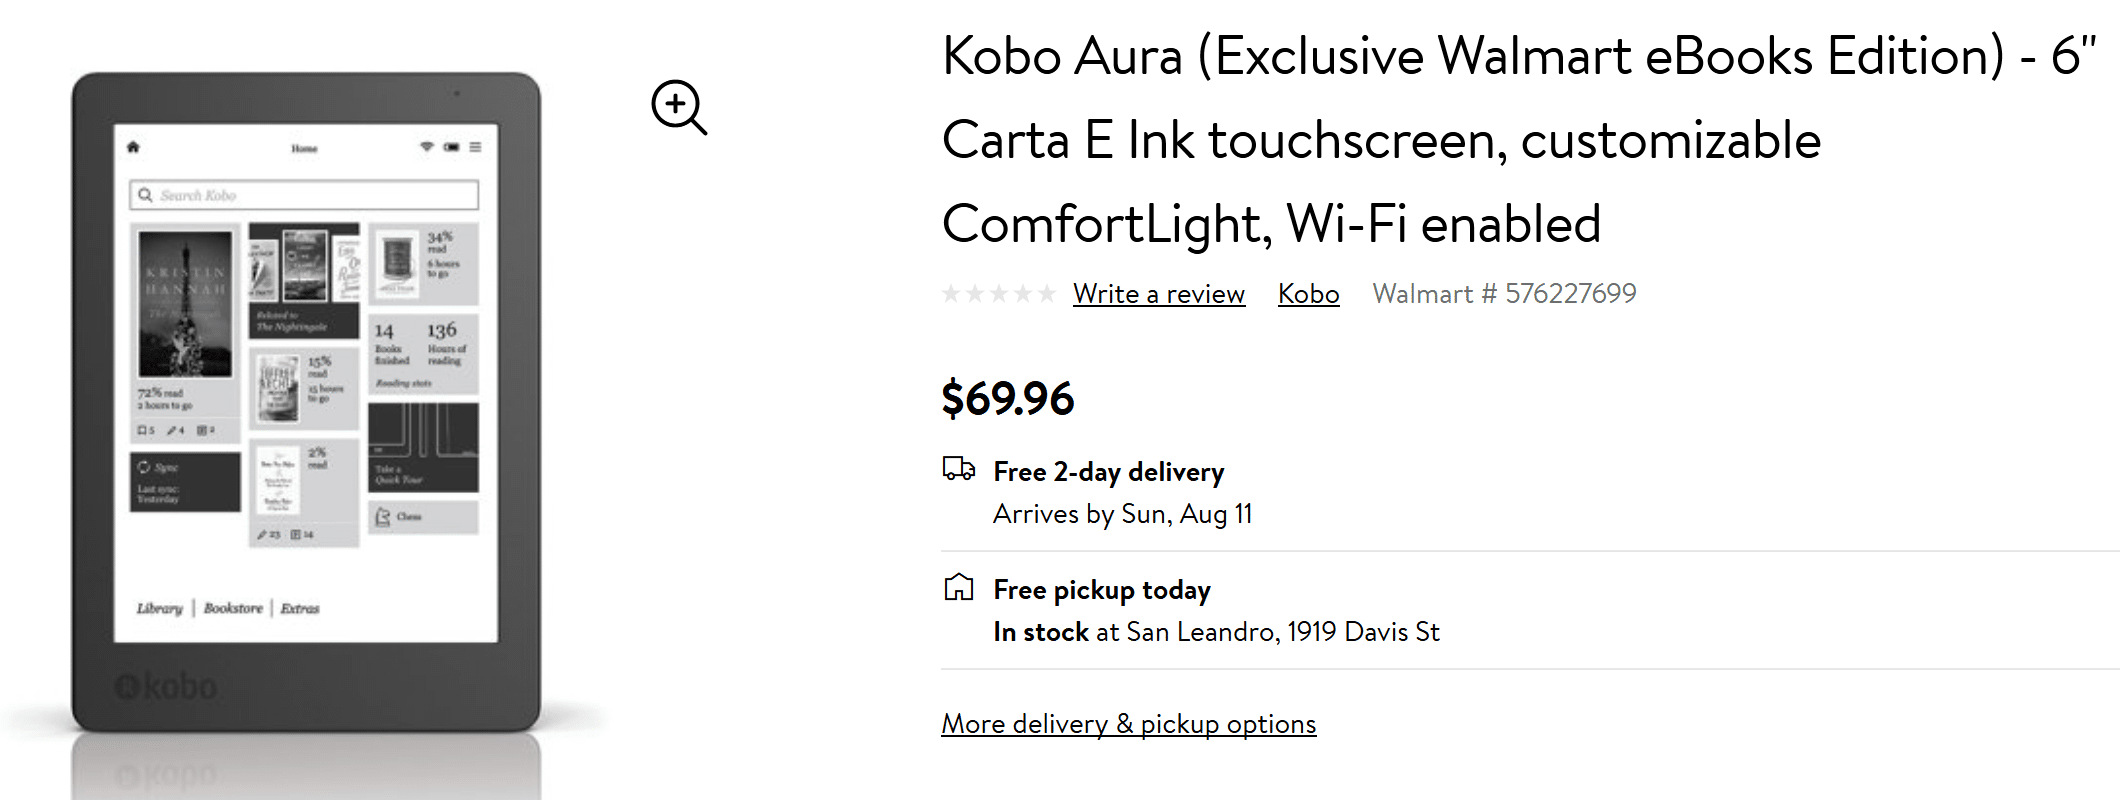 Walmart meluncurkan Kobo Aura - Edisi eBook Walmart Eksklusif